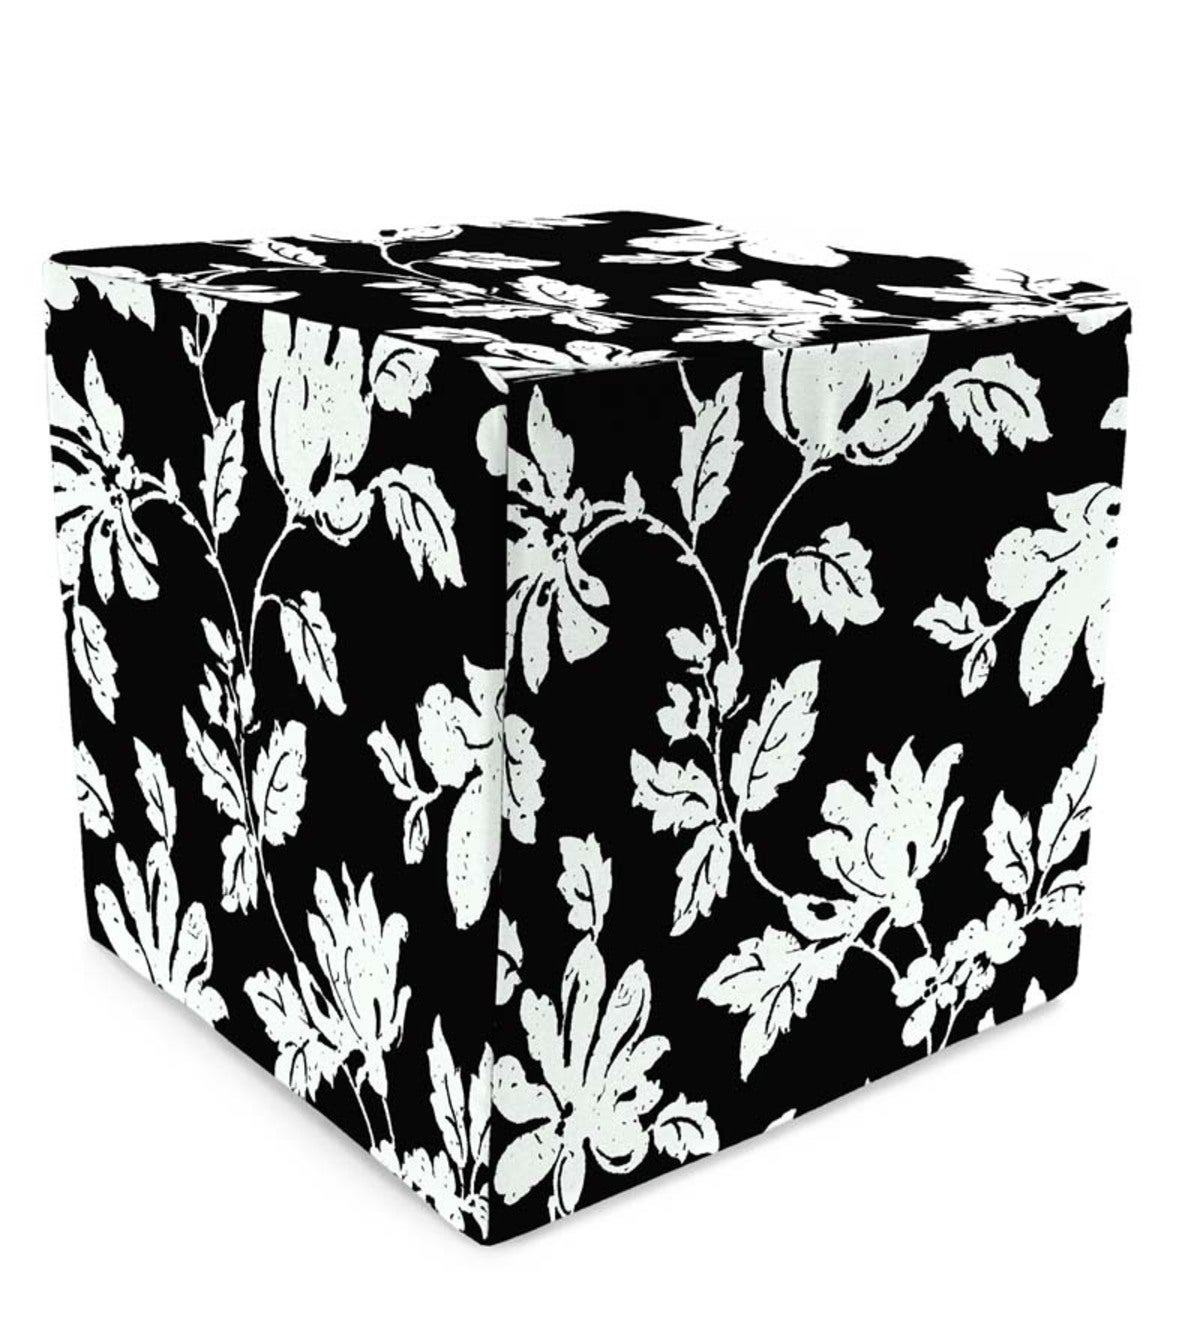 Sale! Polyester Classic Cube Ottoman, 15”x 15” - Black Damask